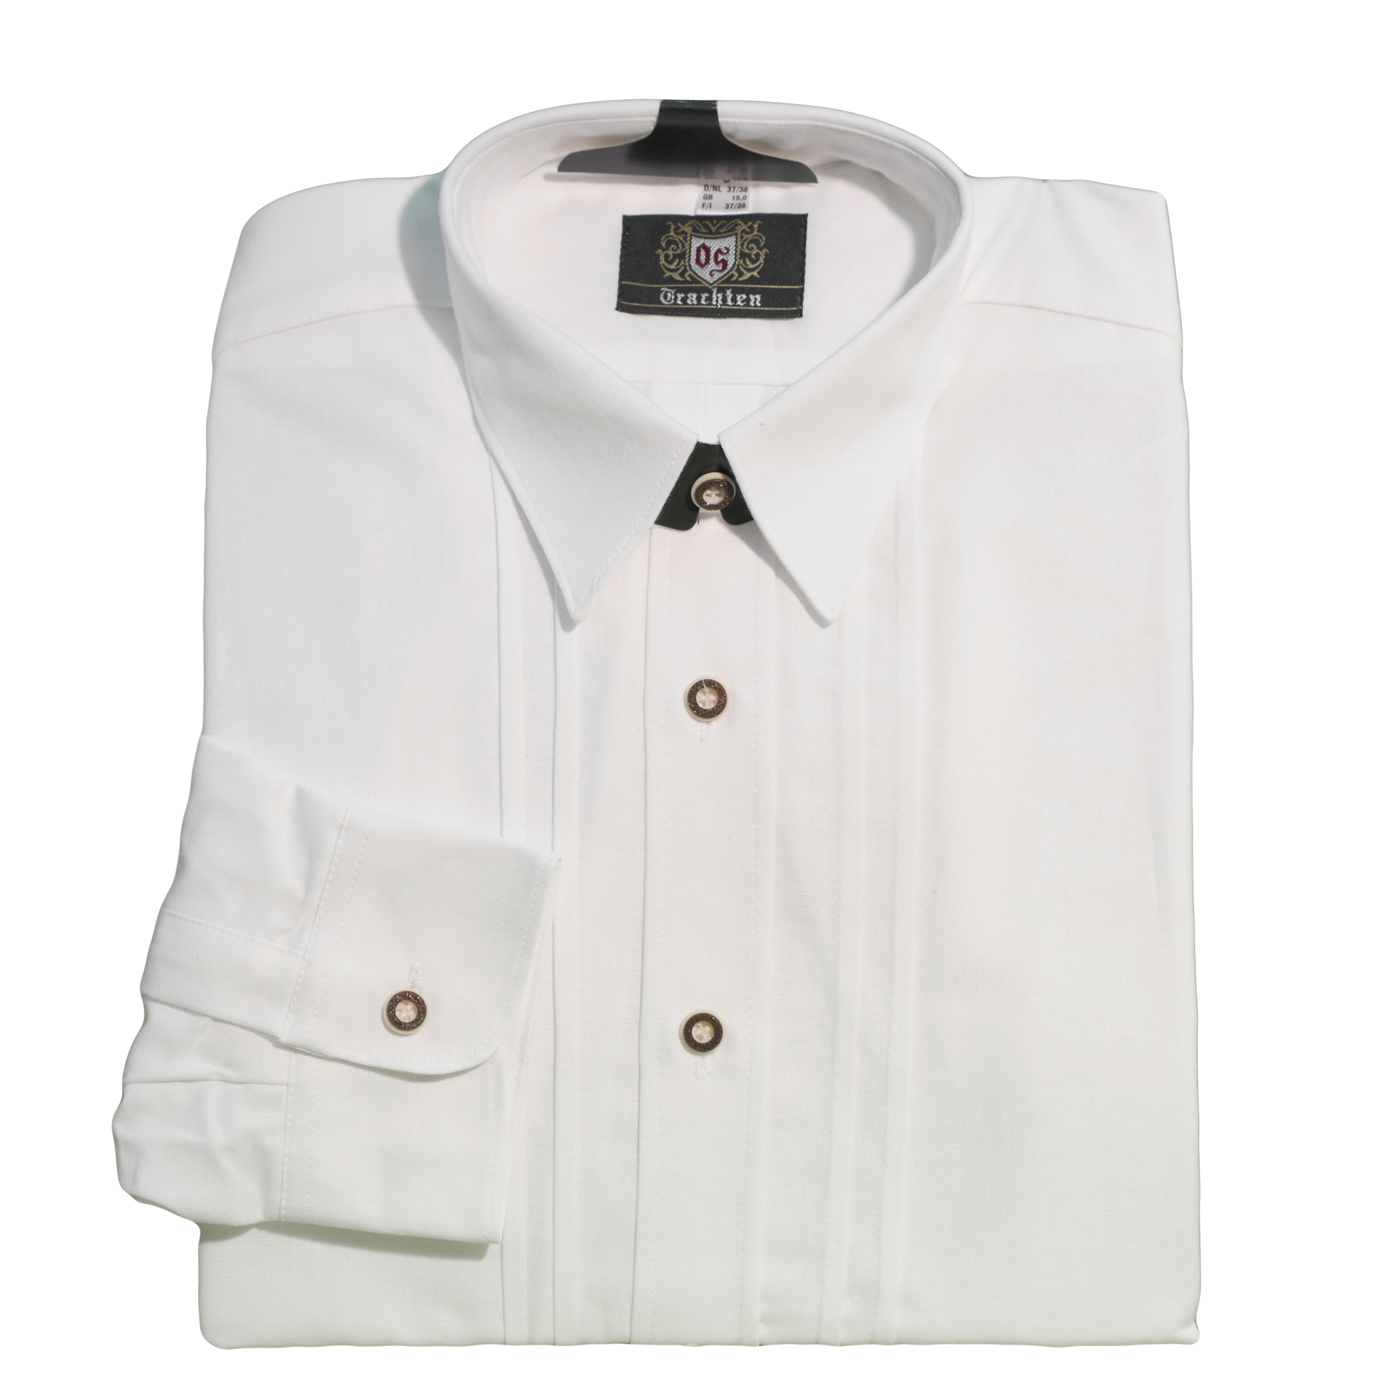 Fashion Formal Shirts Long Sleeve Shirts OS Trachten Long Sleeve Shirt white business style 